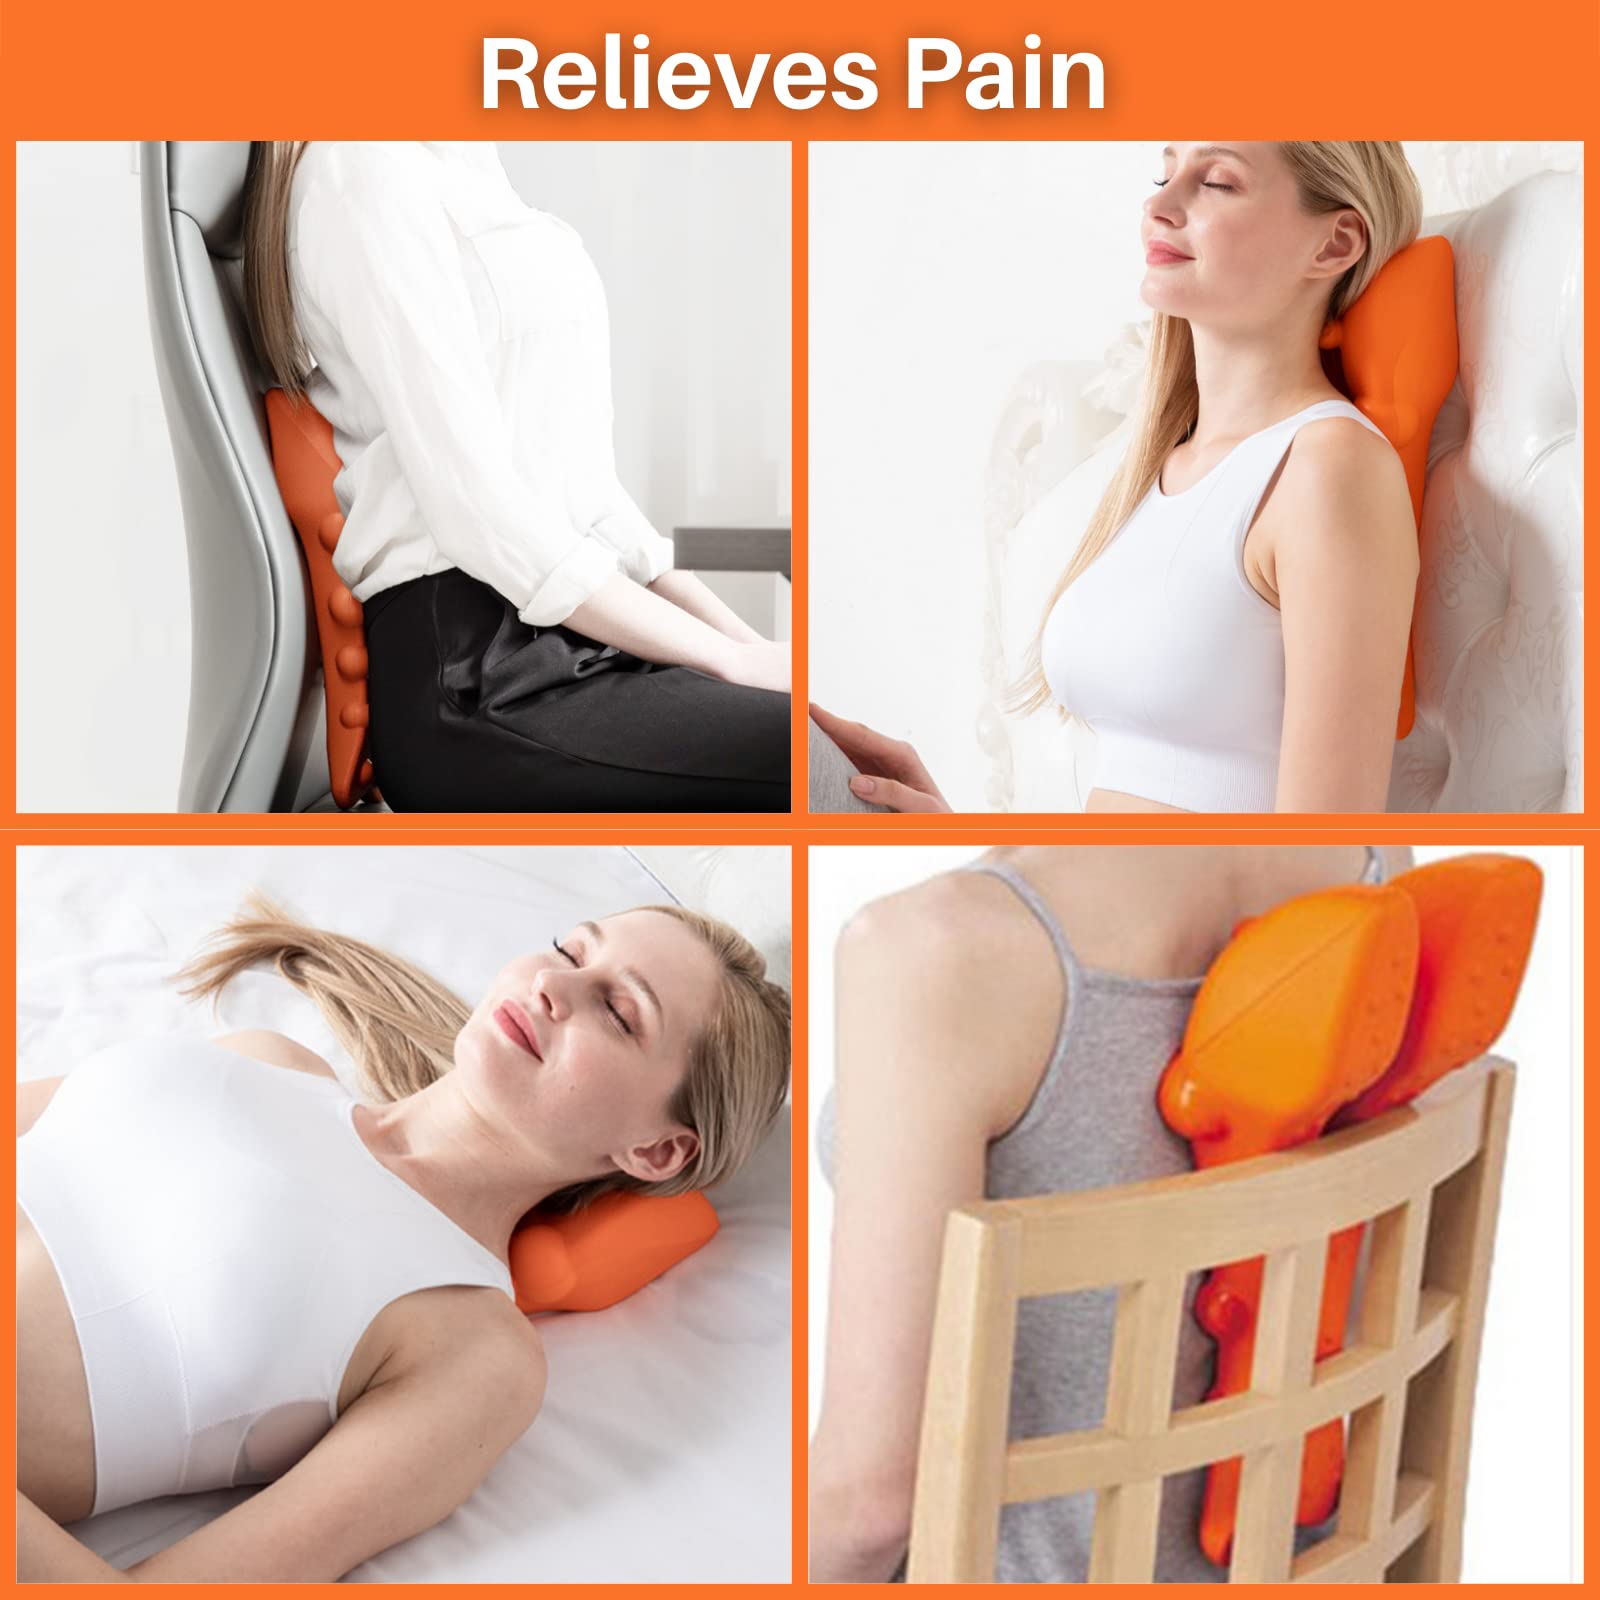 Neck Pain Relief Device, Neck Massager Ball Roller, Neck Stretcher Pressure  Point Massage Tool, Hand Roller for Neck Pain Relief